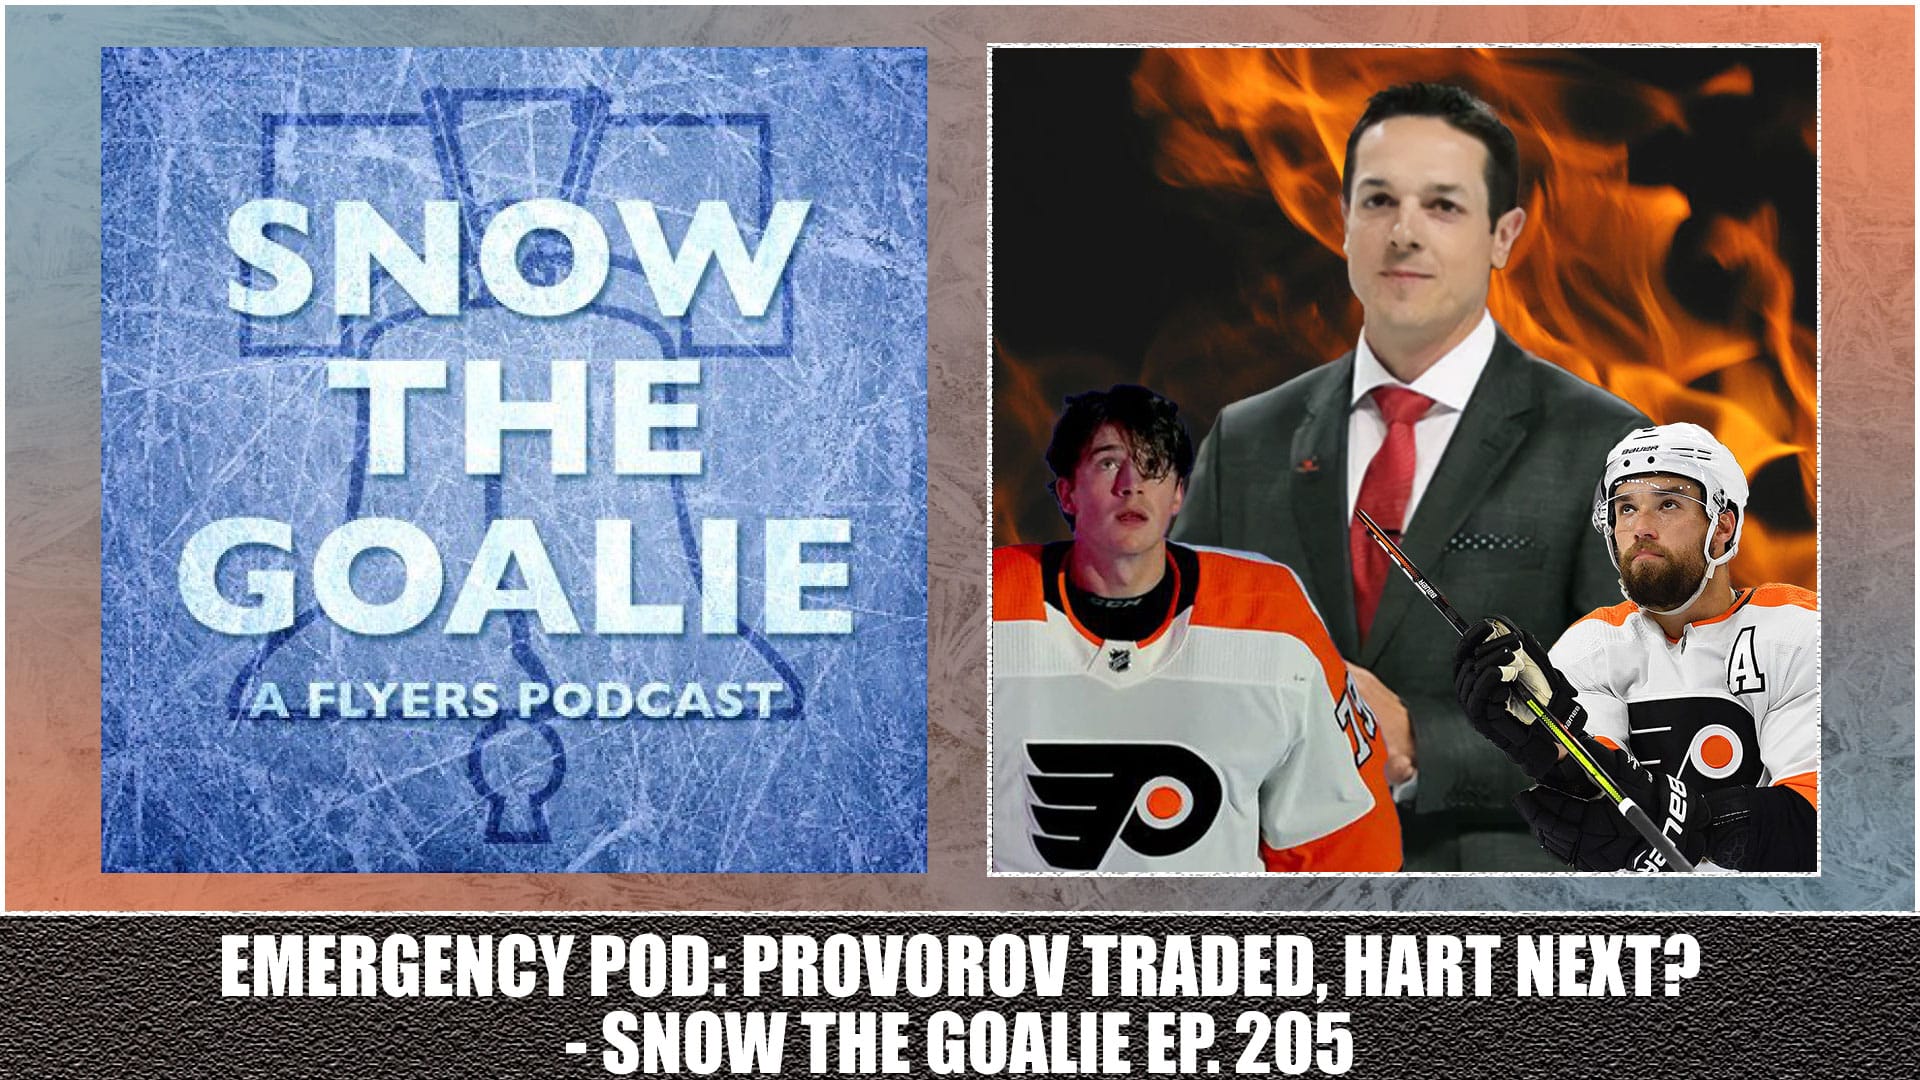 Snow The Goalie: Emergency Pod: Provorov Traded, Hart Next?